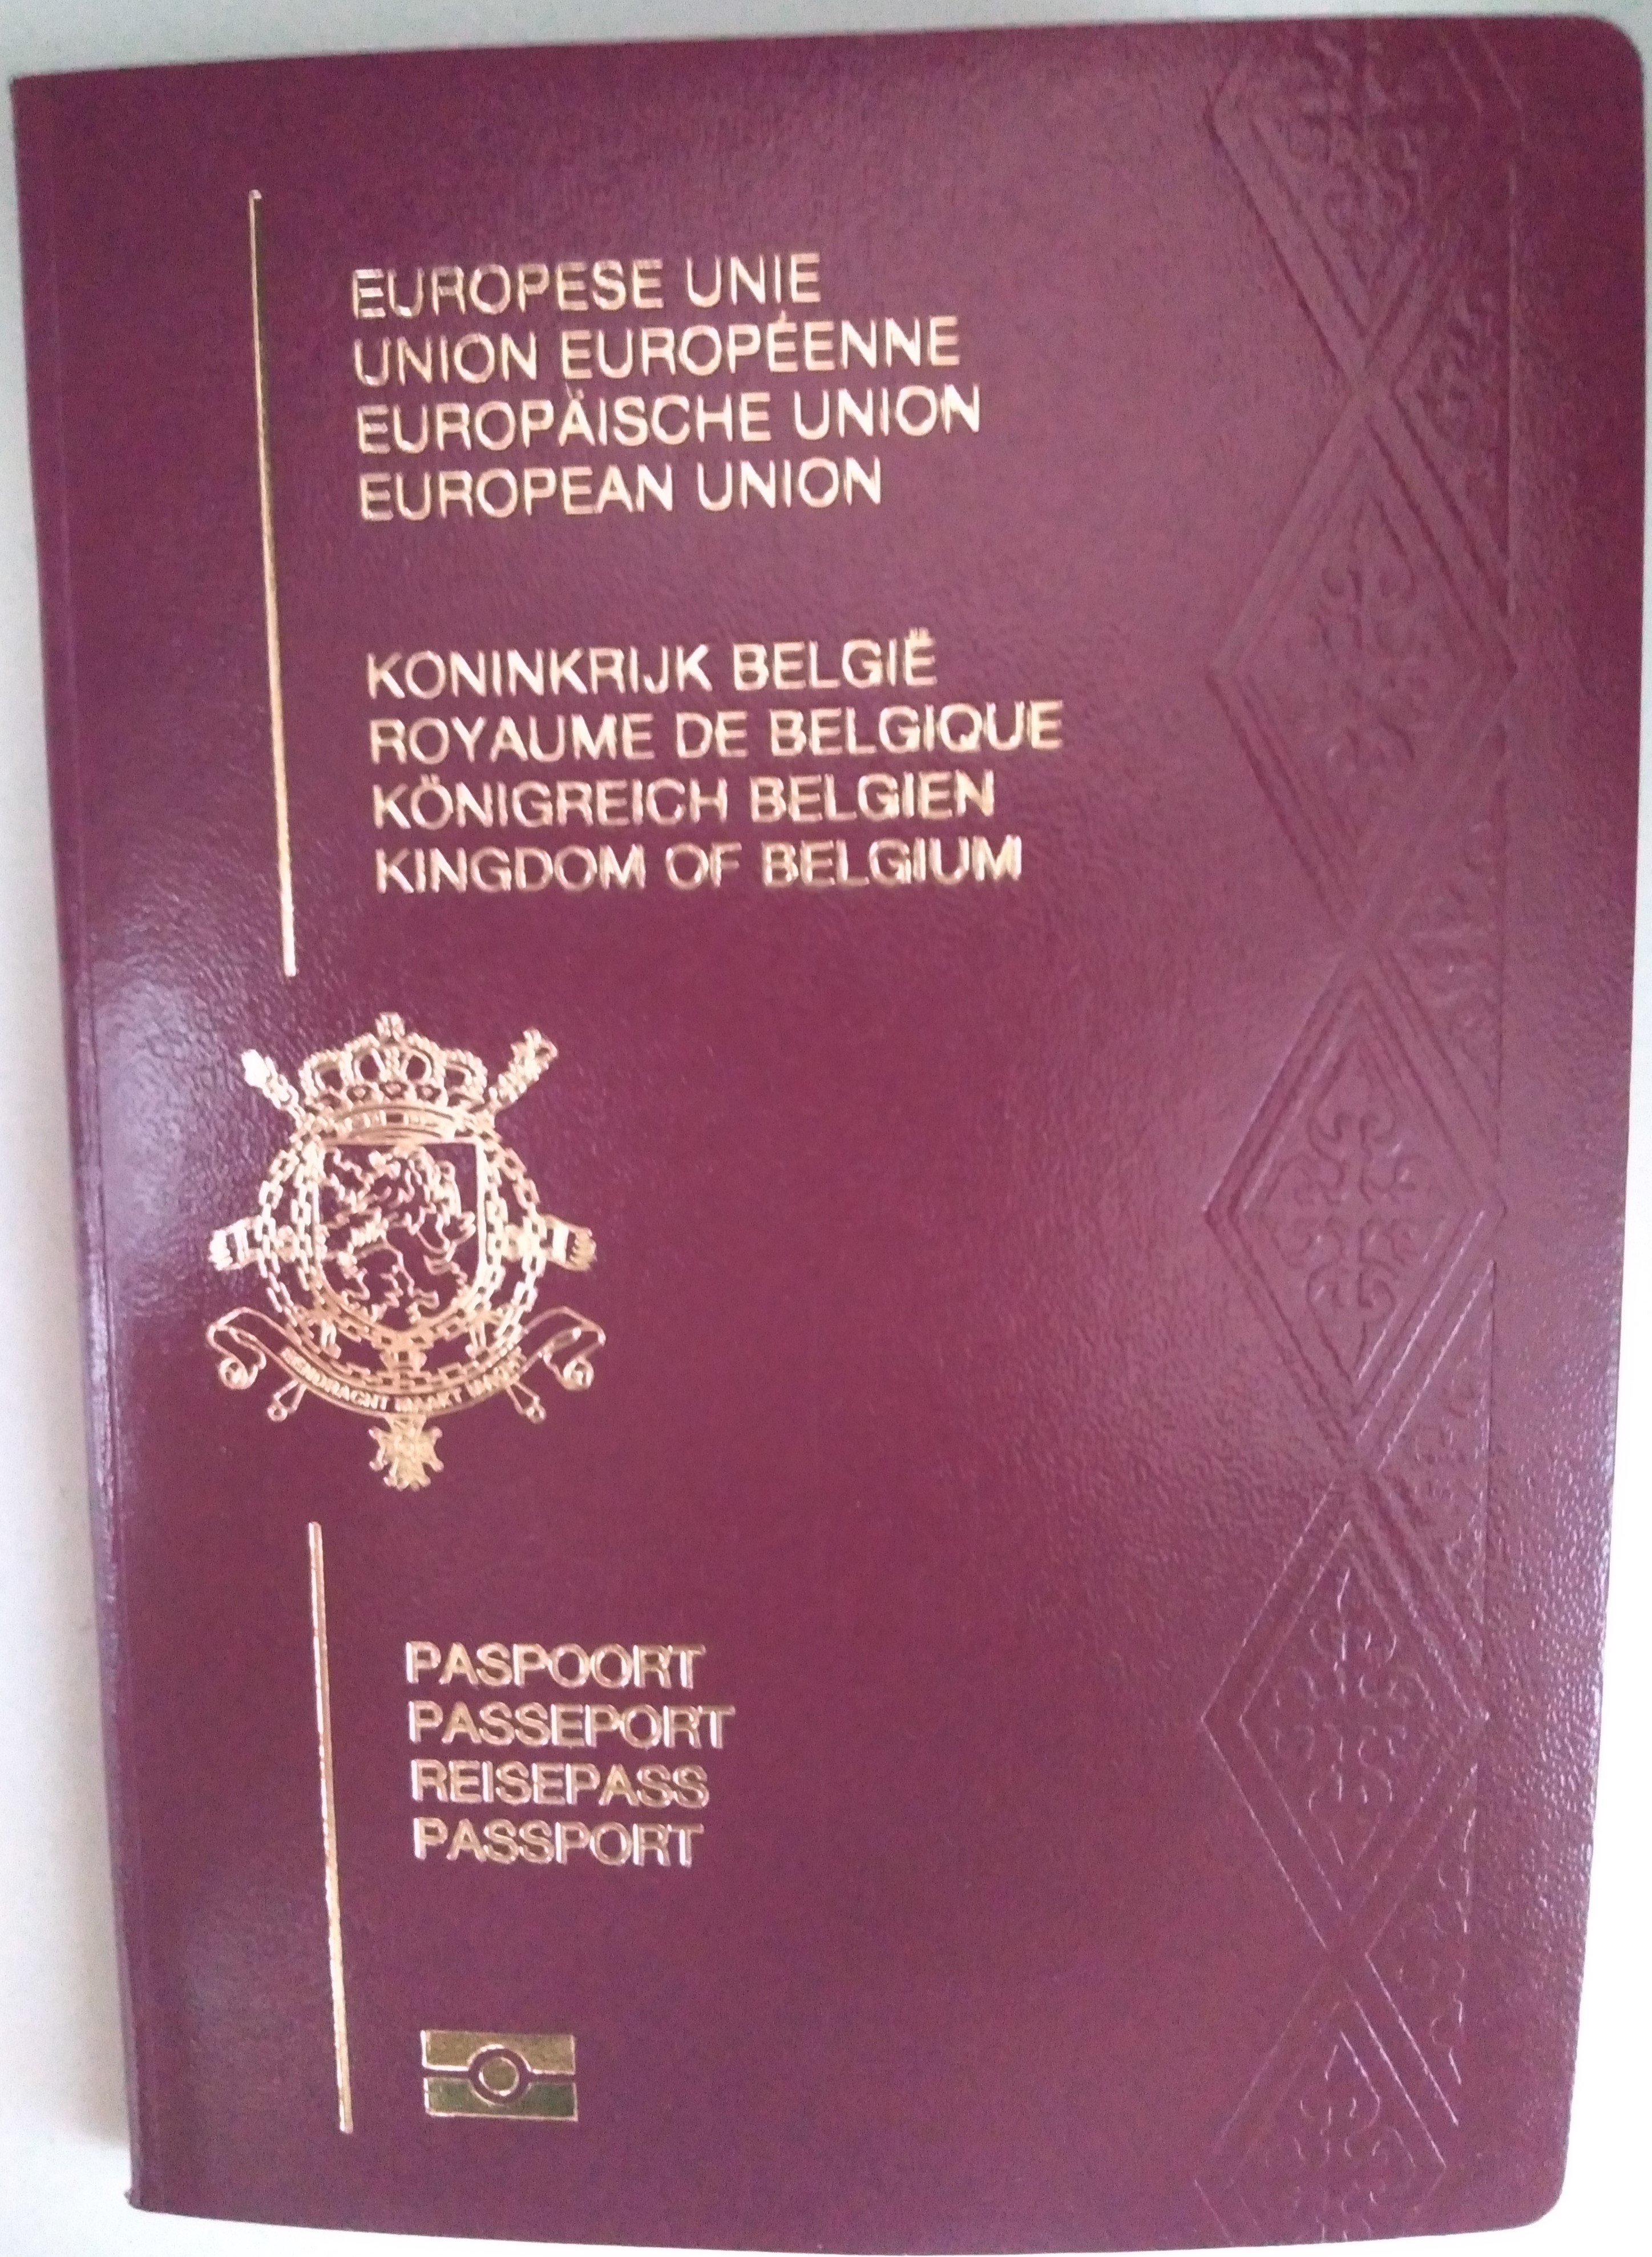 Internationaal paspoort (reispas)